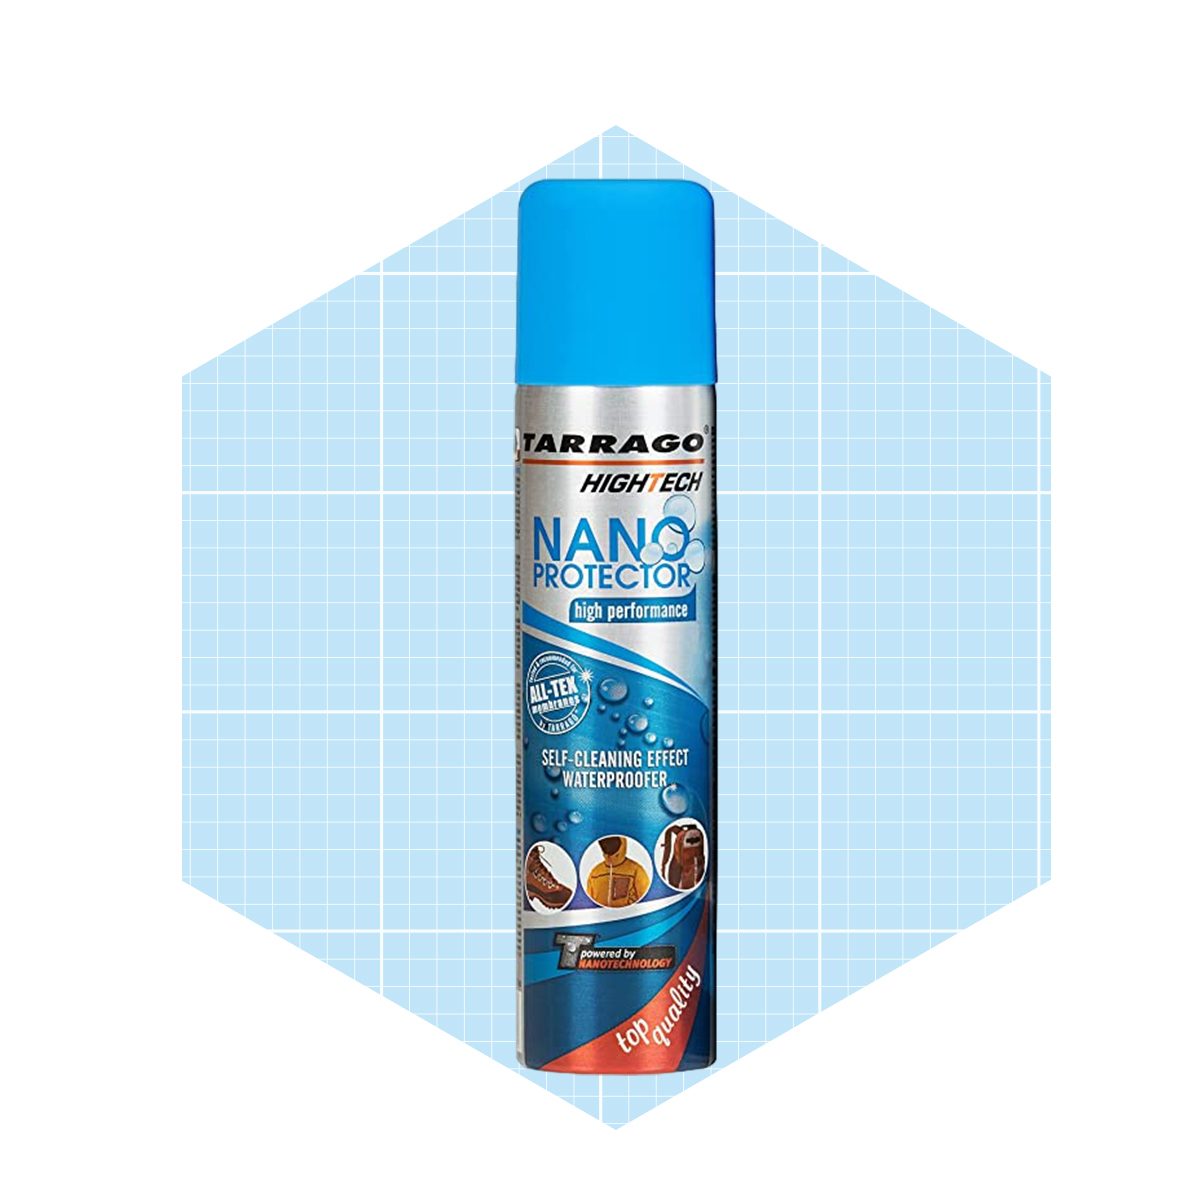 UV-Tech Revivex Protectant Spray Bottle